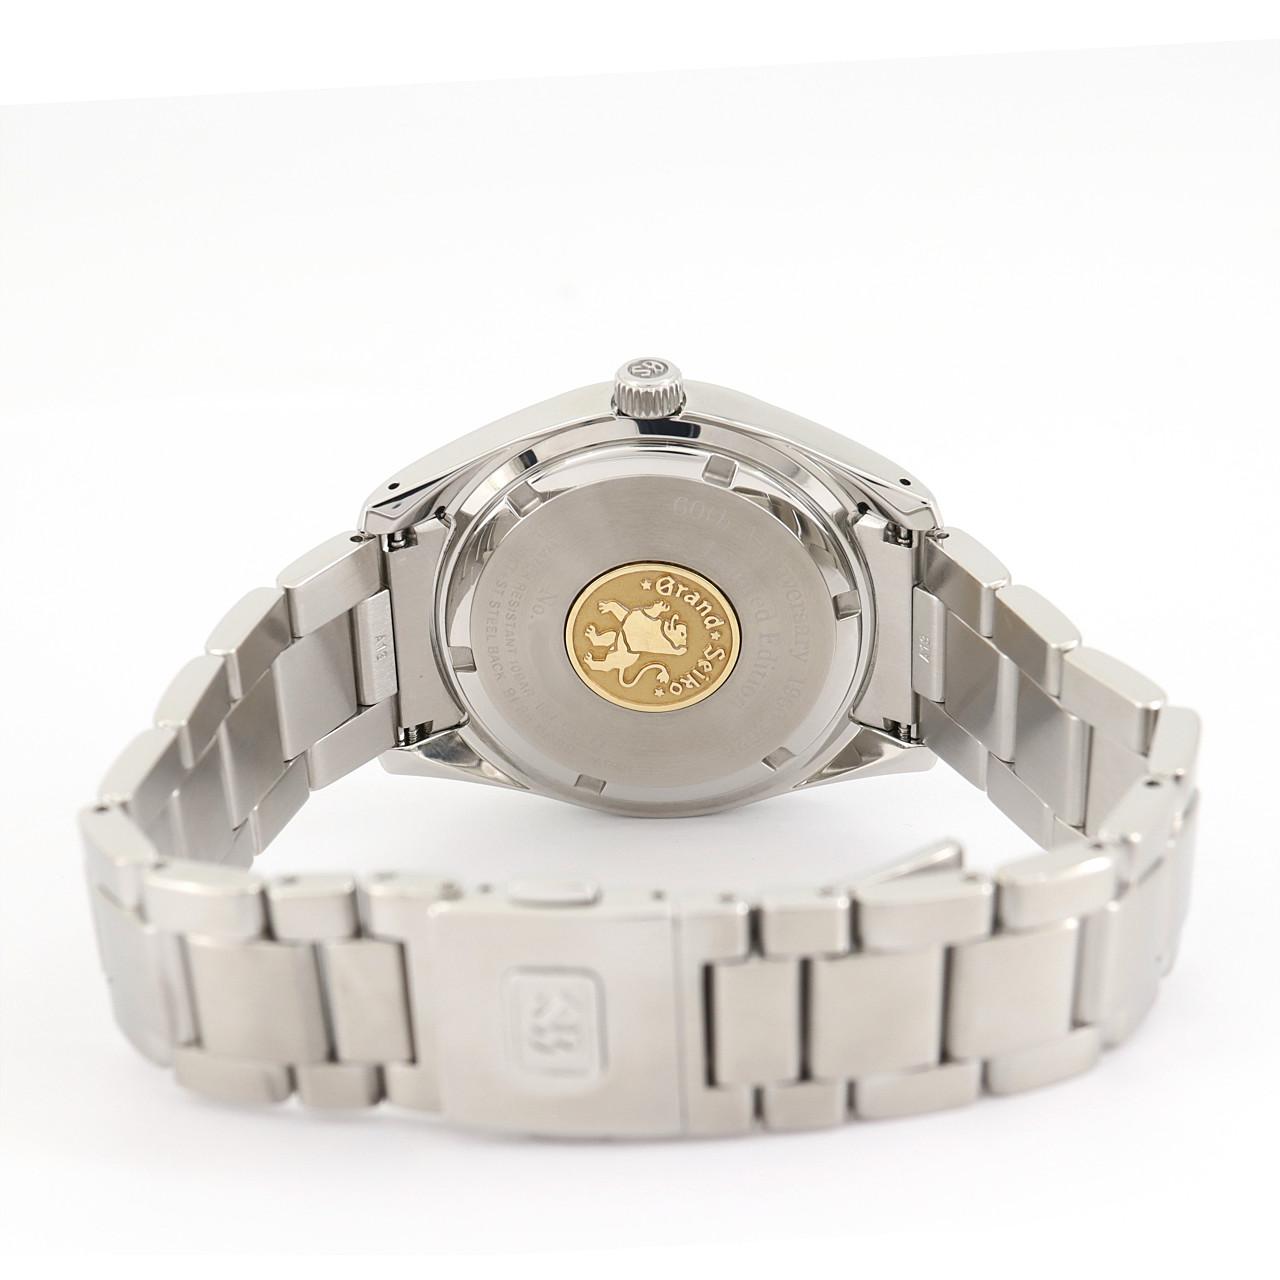 Grand Seiko ヘリテージコレクション クオーツ メンズ 腕時計 SS